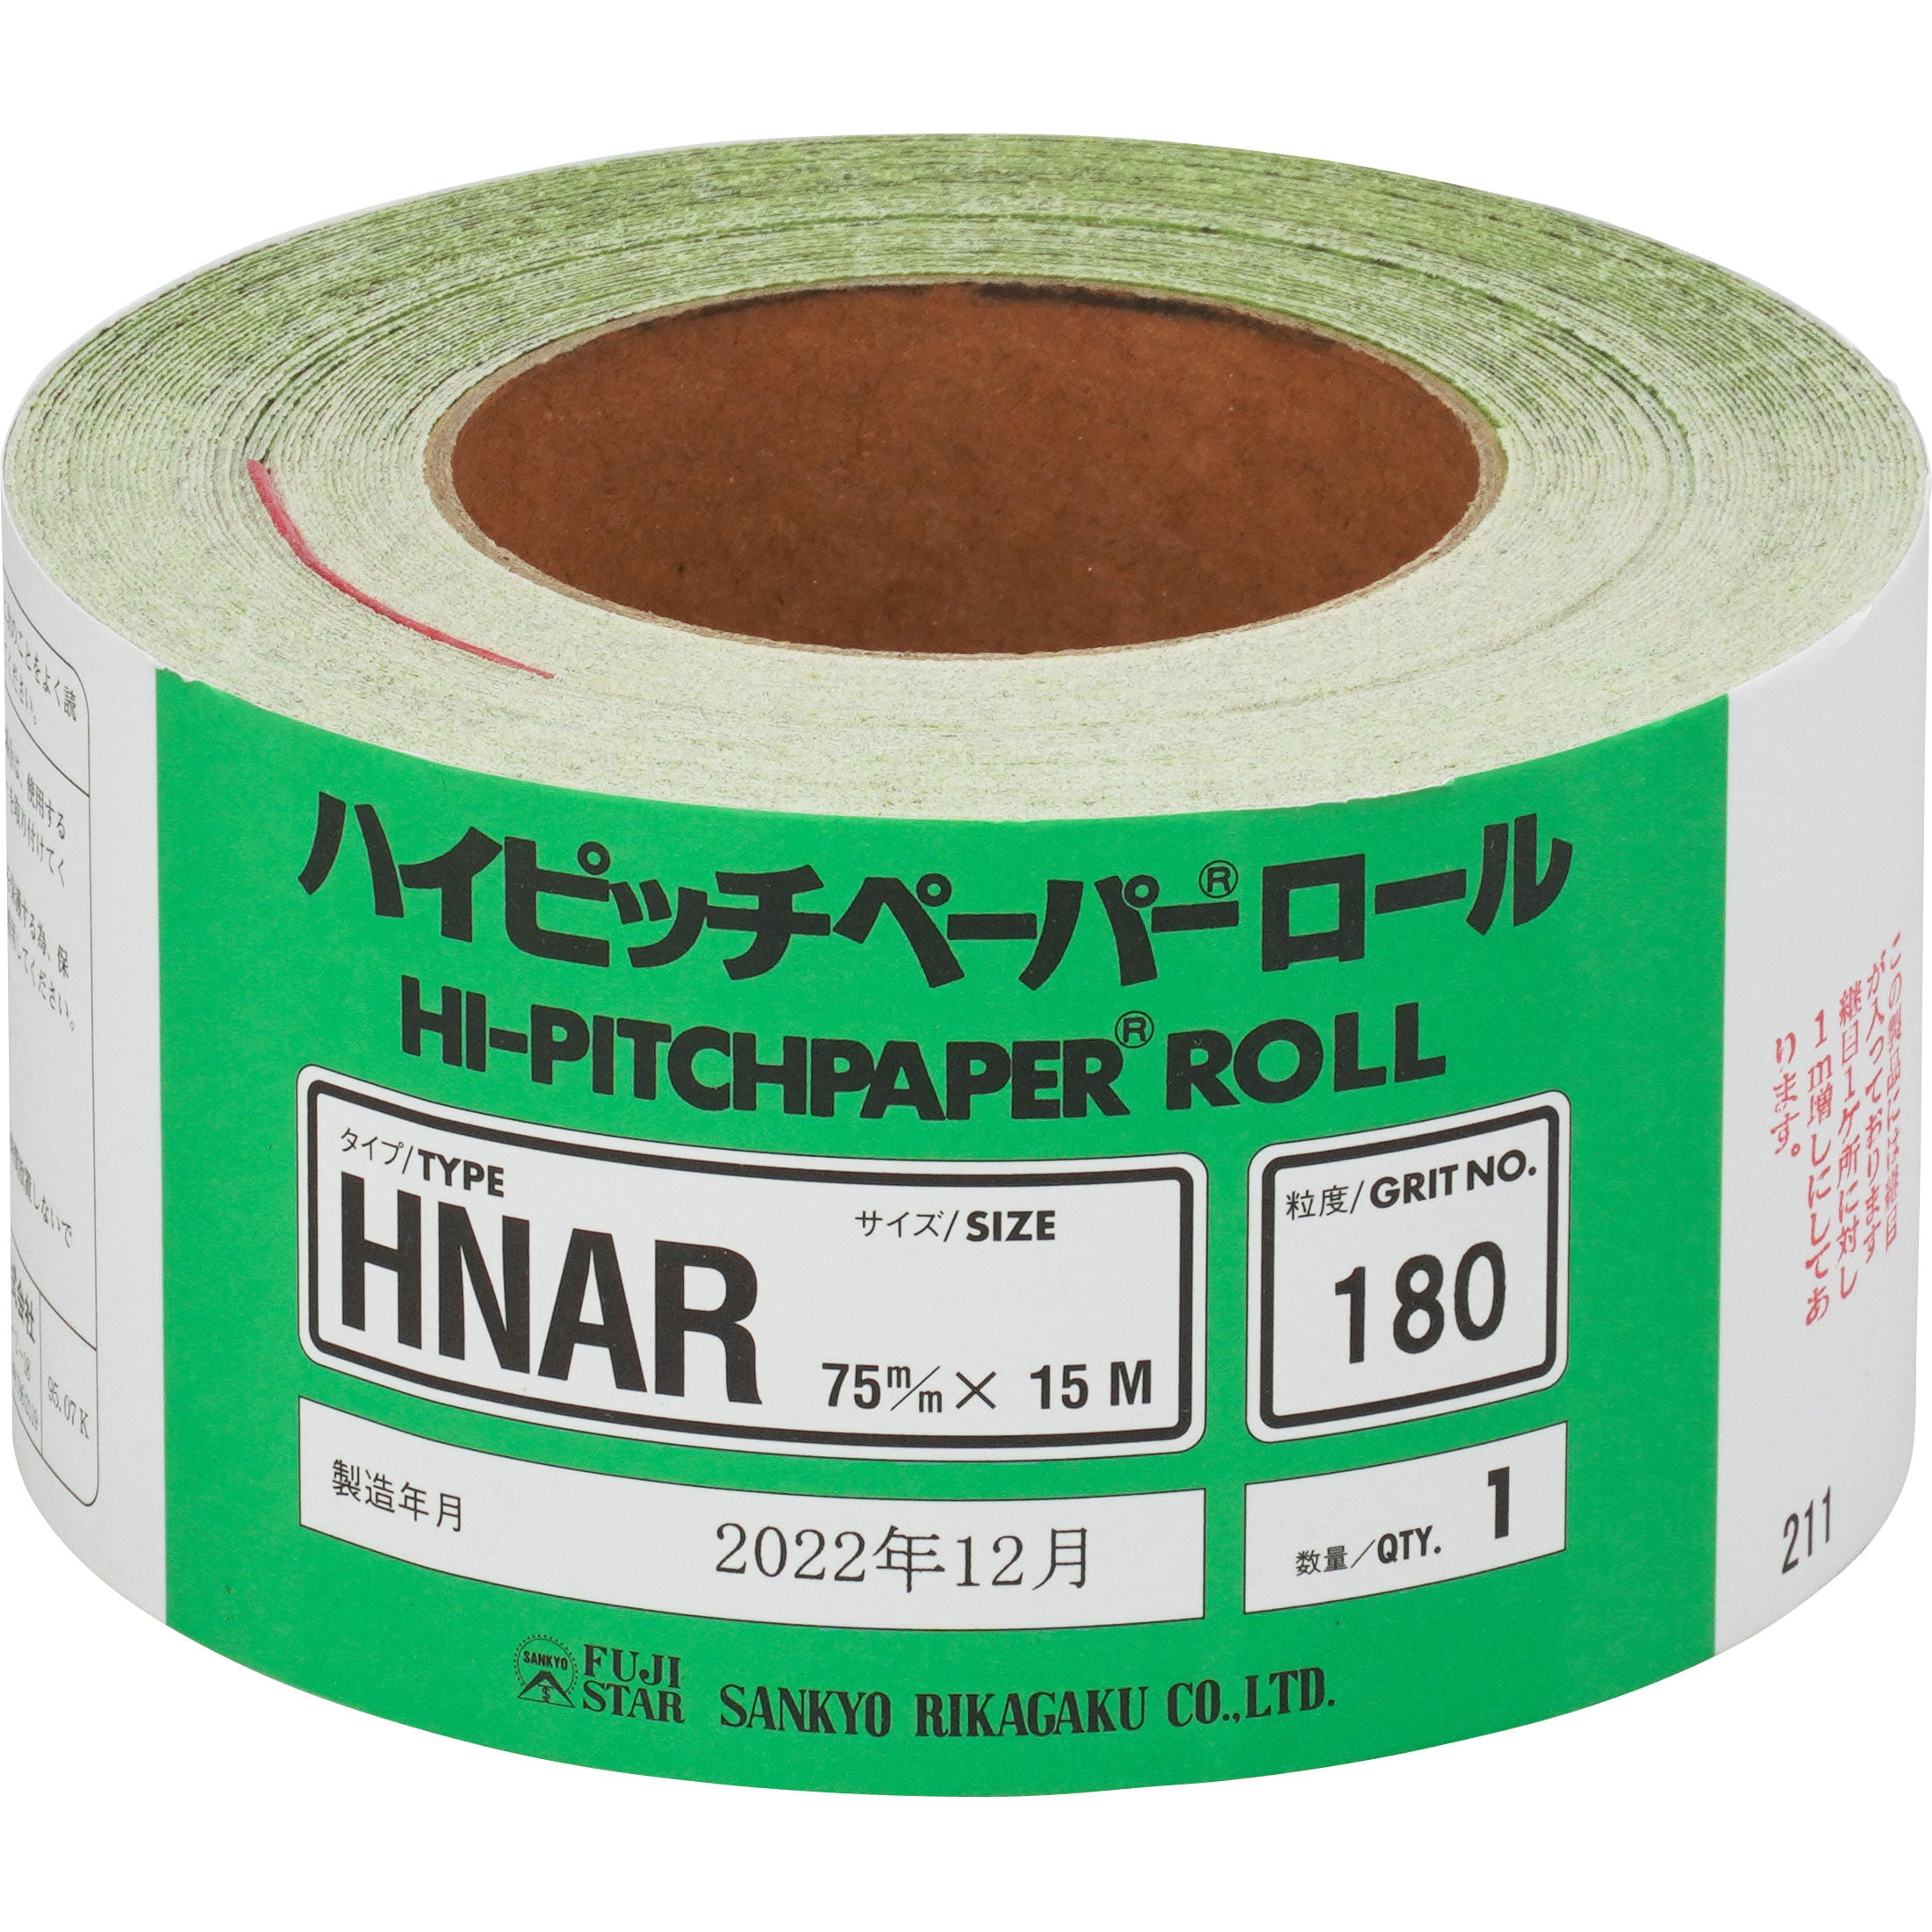 HNAR-180 マジック式研磨紙HNARタイプロール(75mm幅) 1個 FUJI STAR